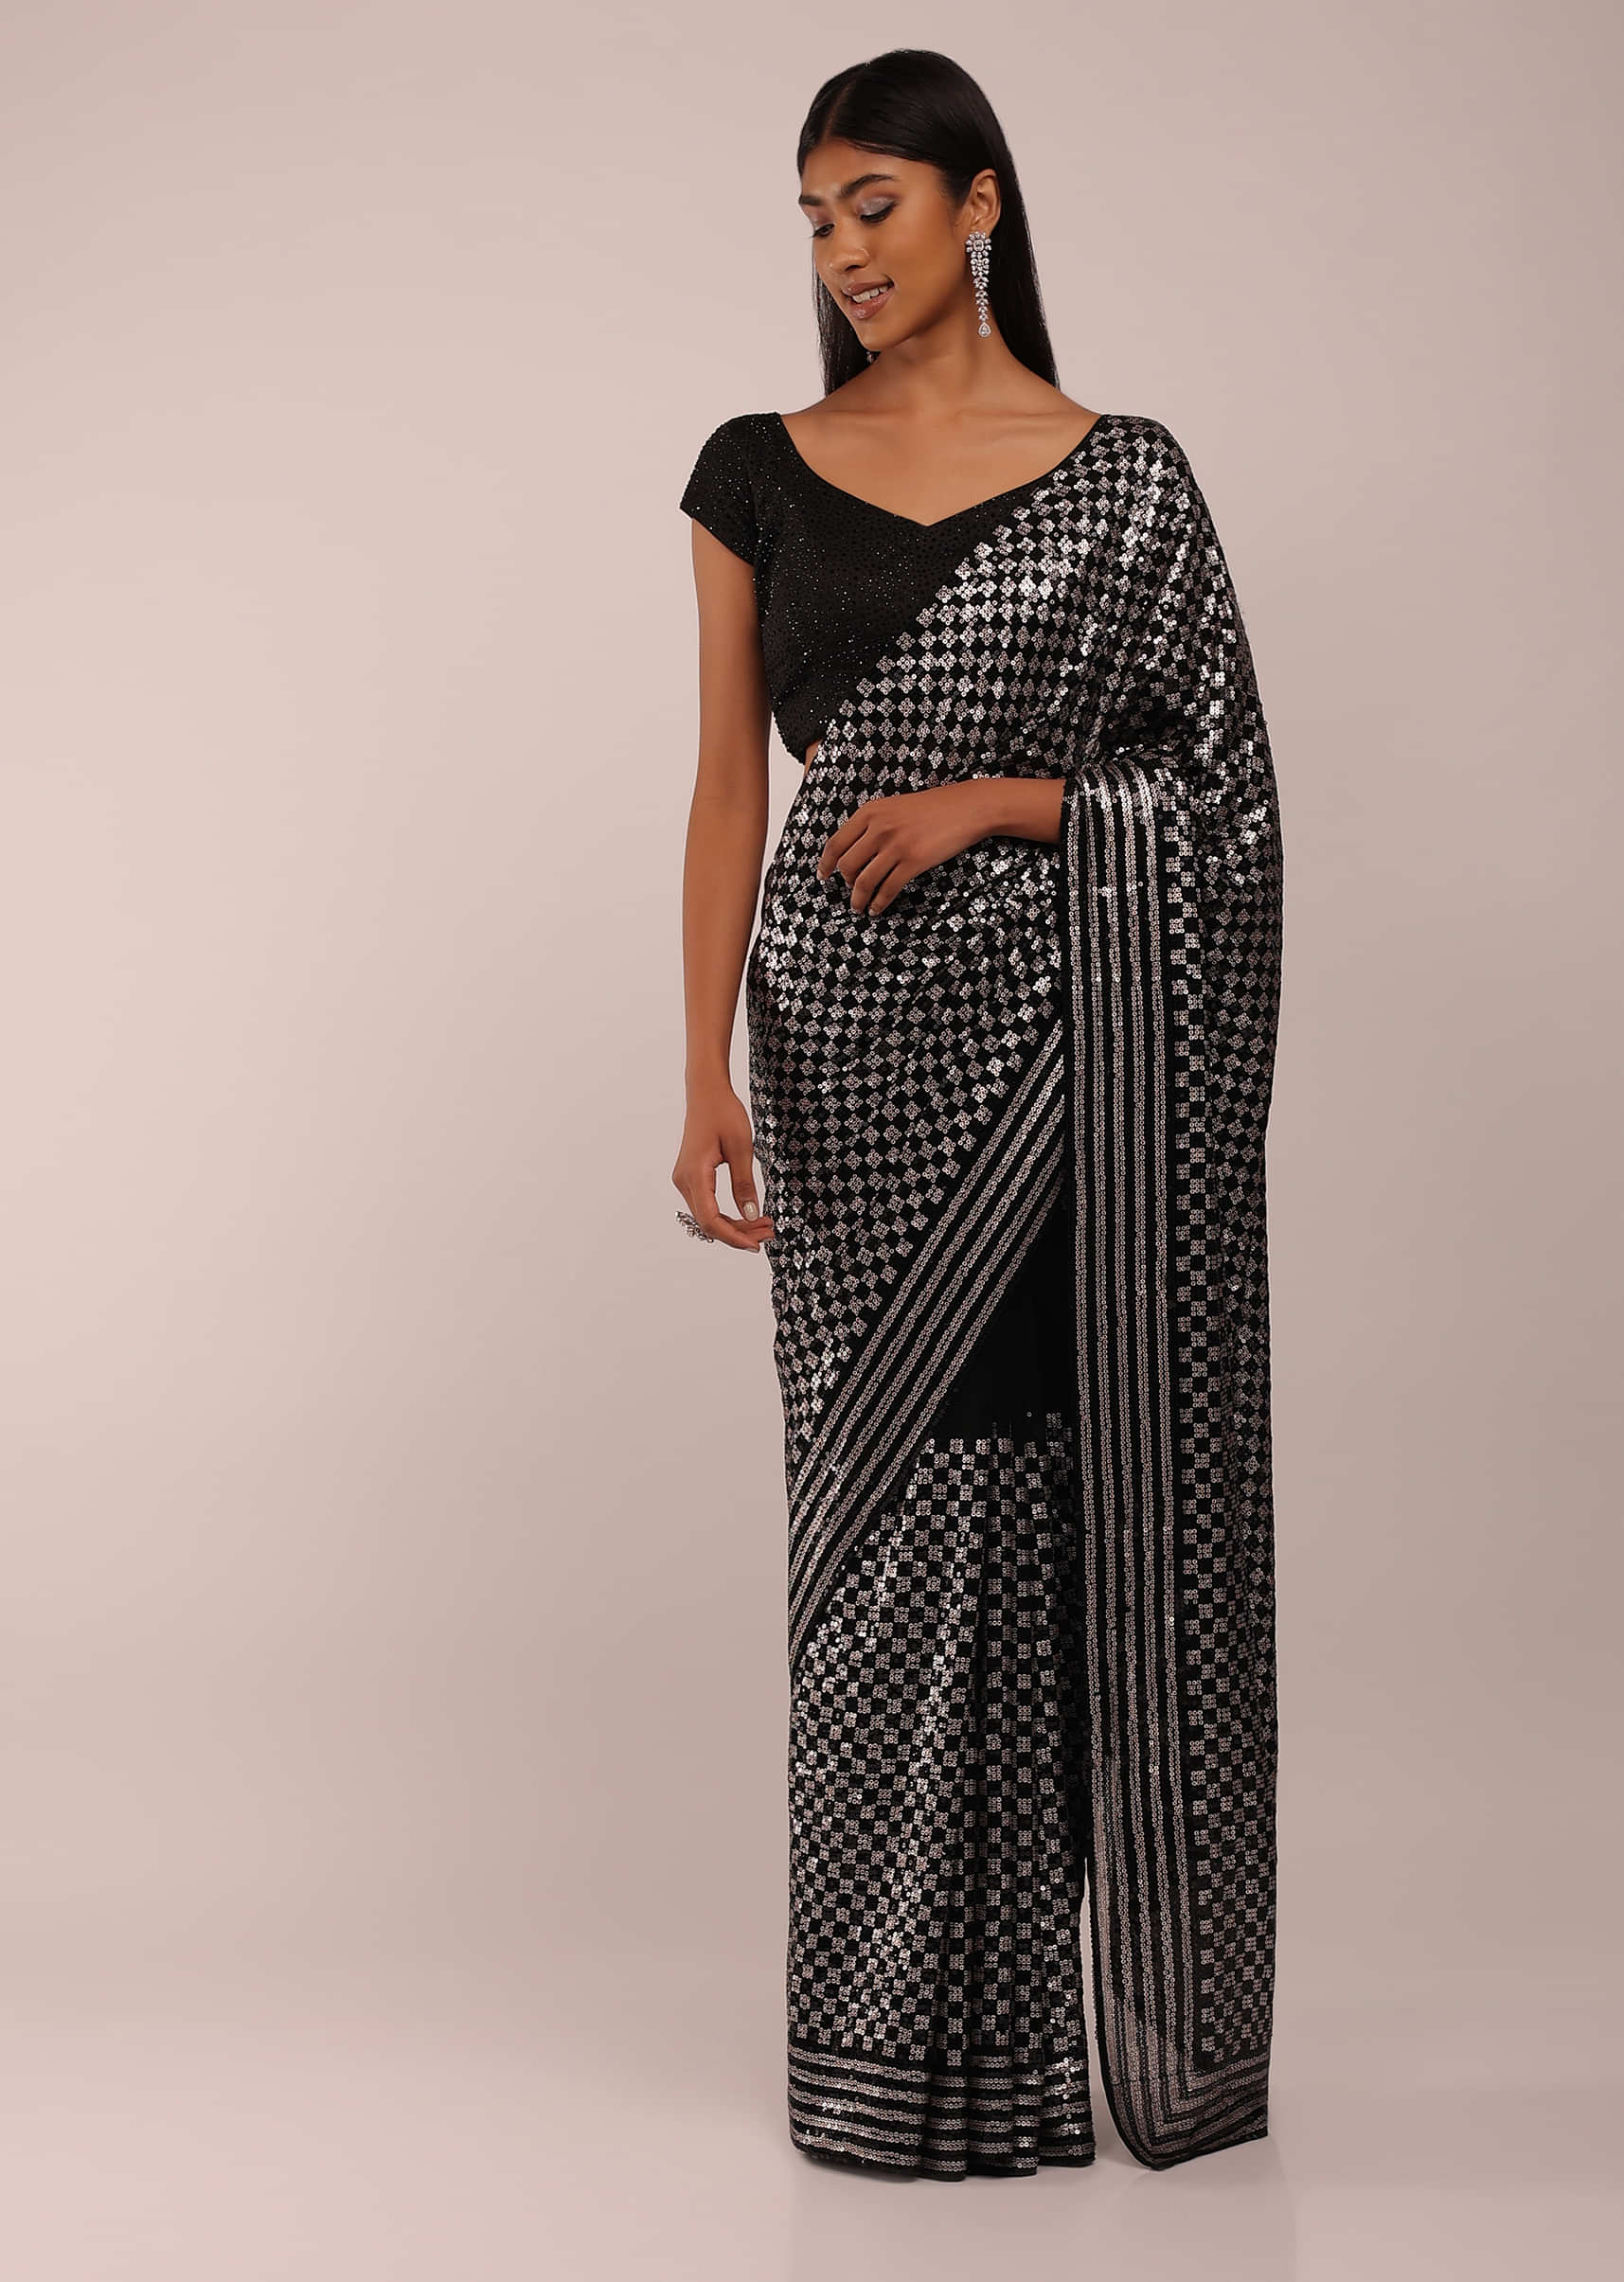 Learn how to drape a cotton saree!